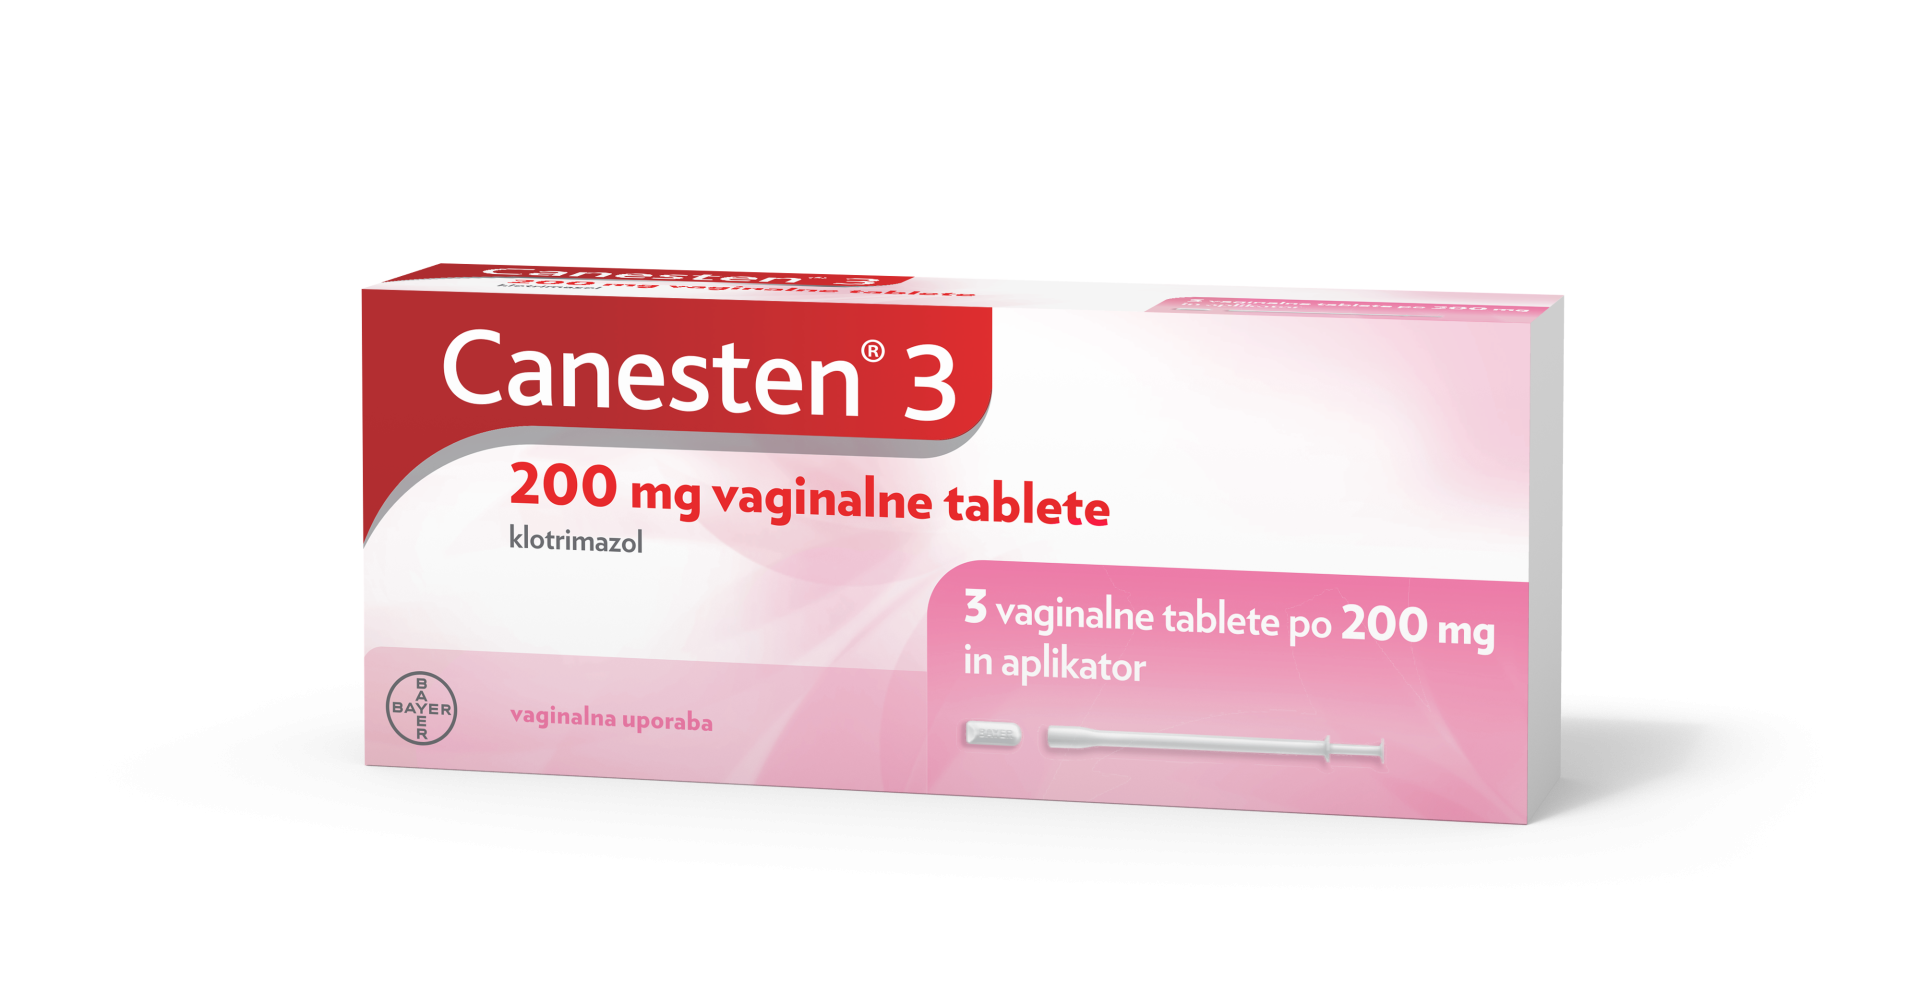 Canesten3 200 mg vaginalne tablete, 3 vaginalne tablete